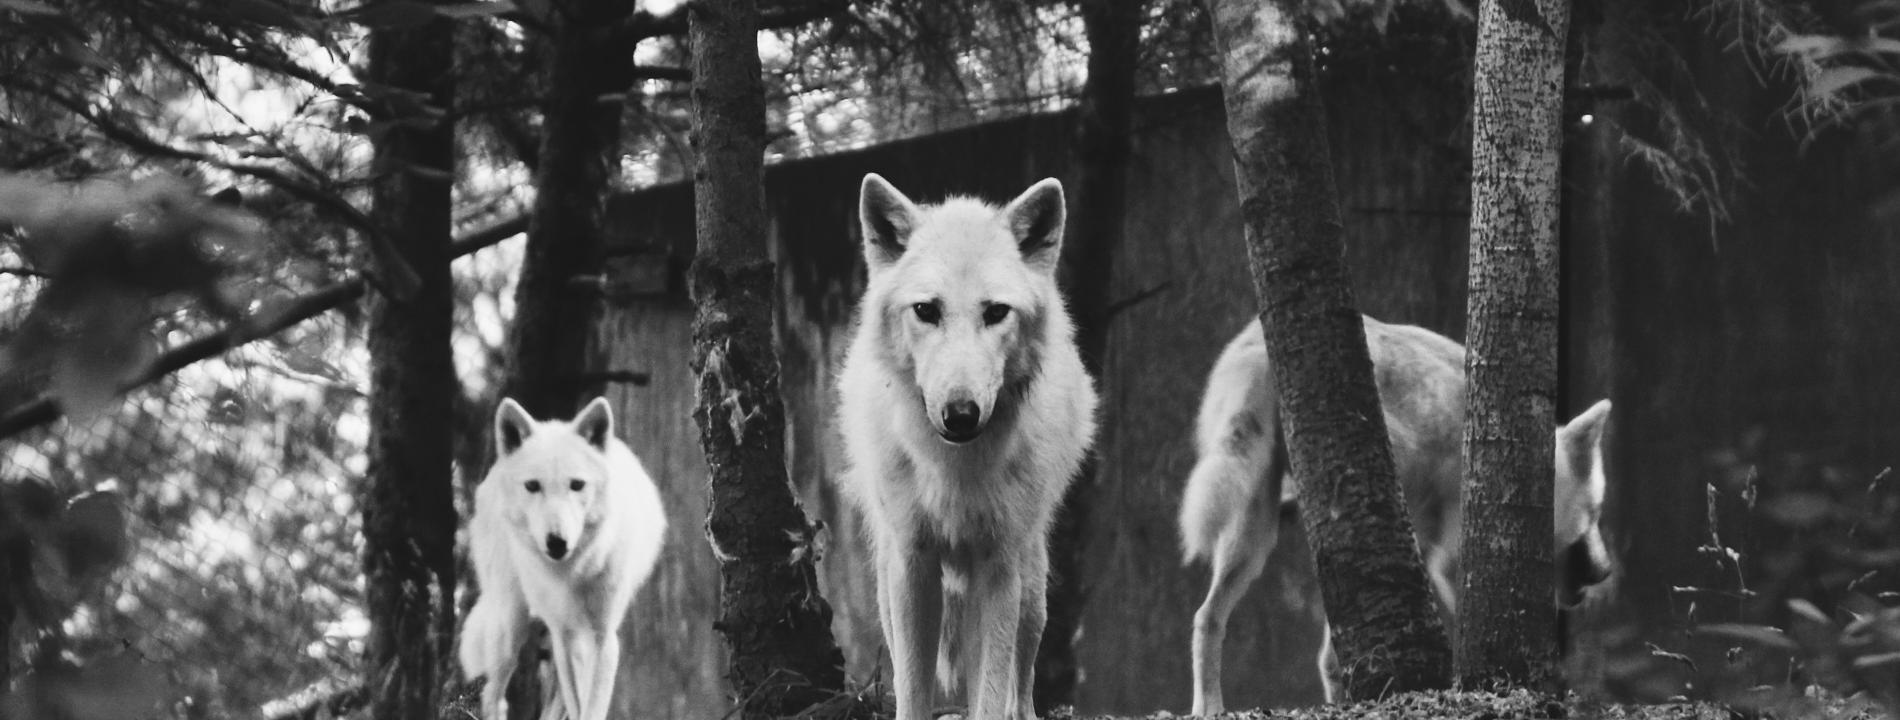 Tree wolfs background